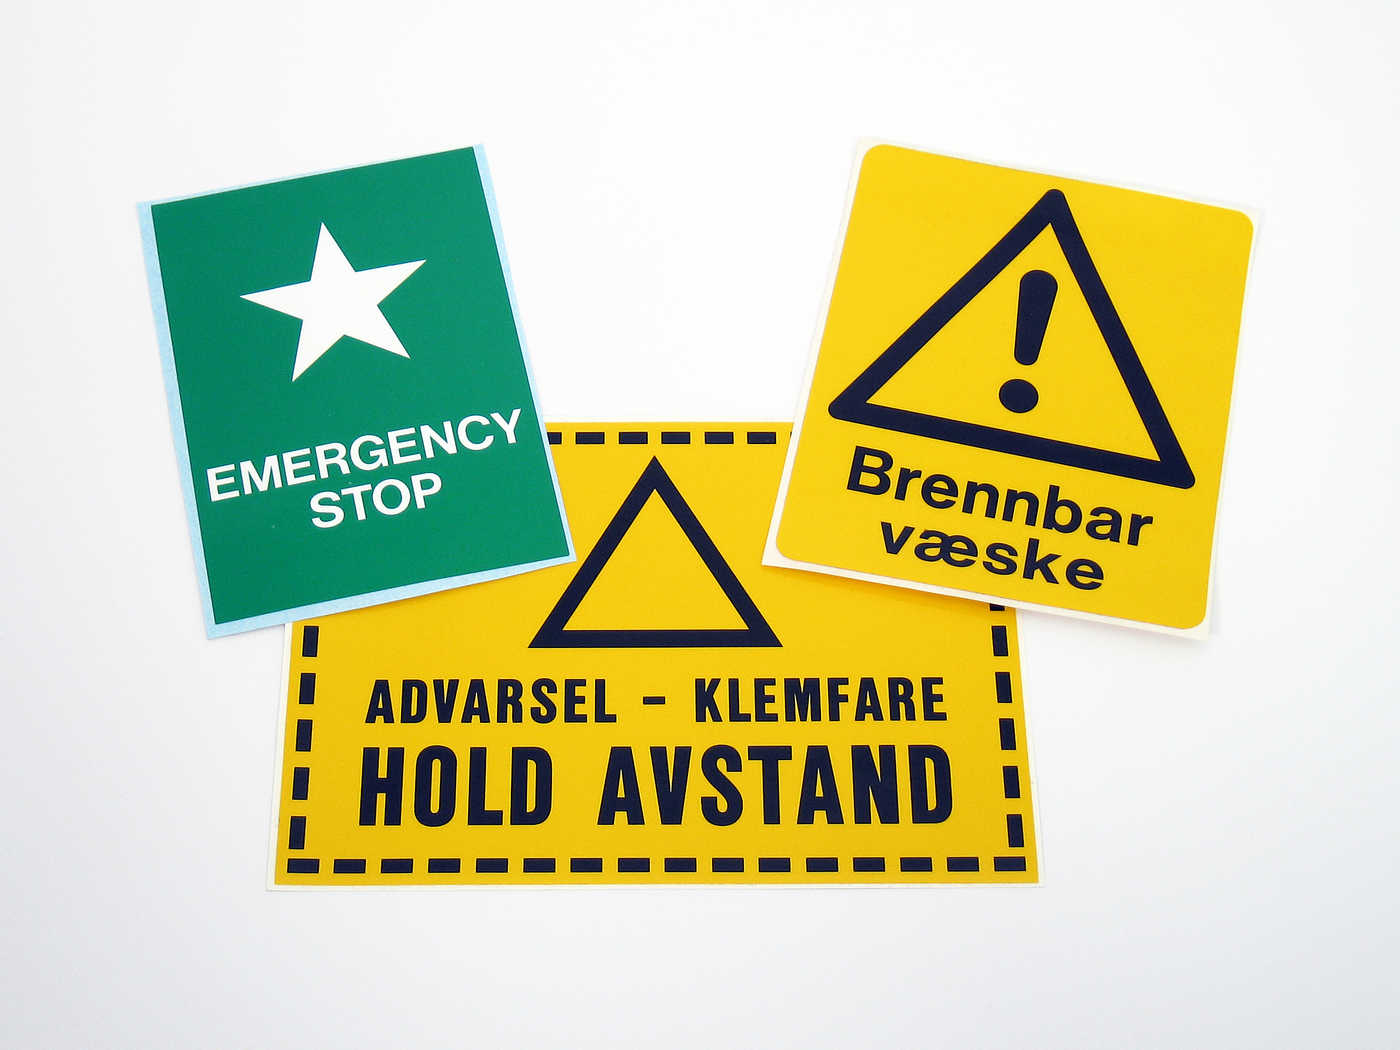 Advarsel - Klemfare - HOLD AVSTAND, Emergency stop, Brennbar væske-klistremerker